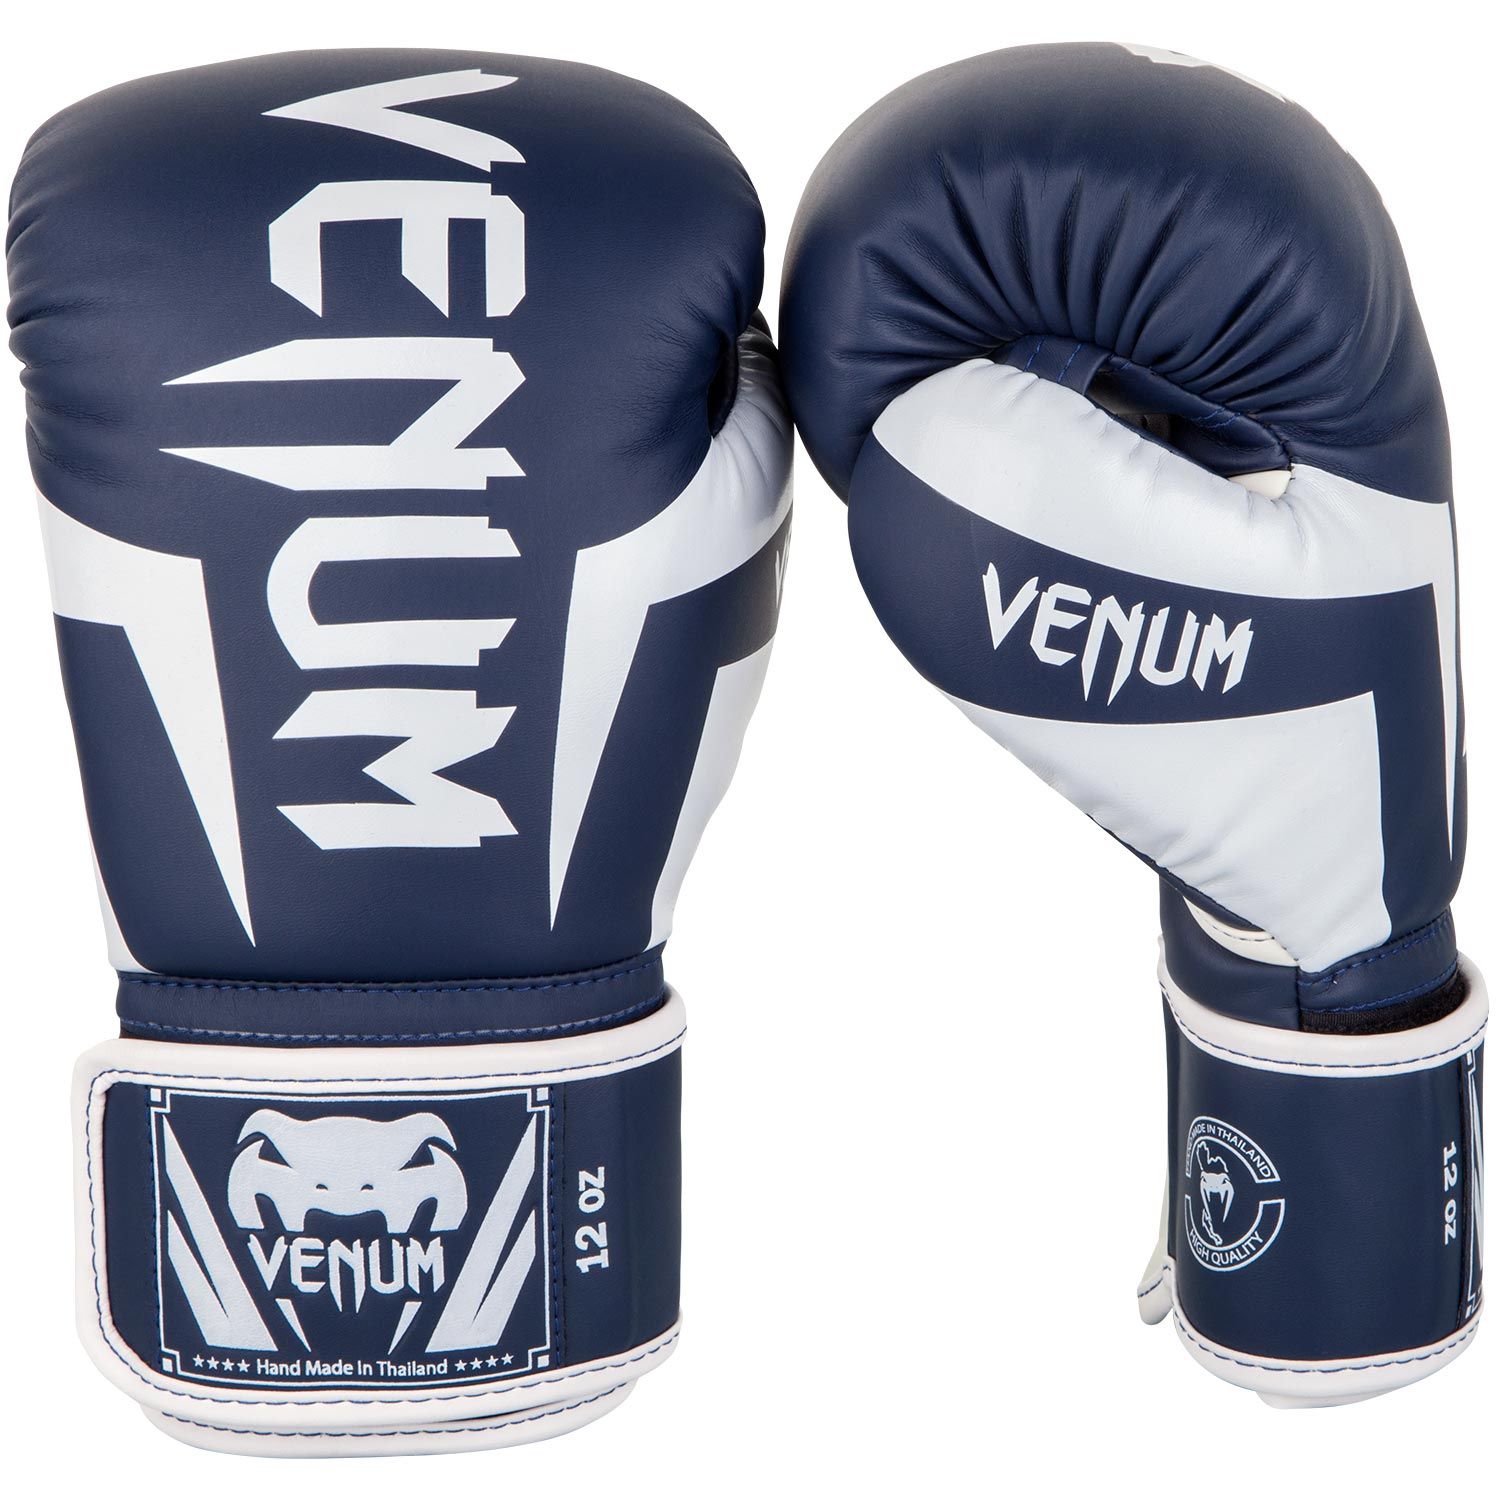 Venum Elite Boxing Gloves - Navy Blue/White - Click Image to Close